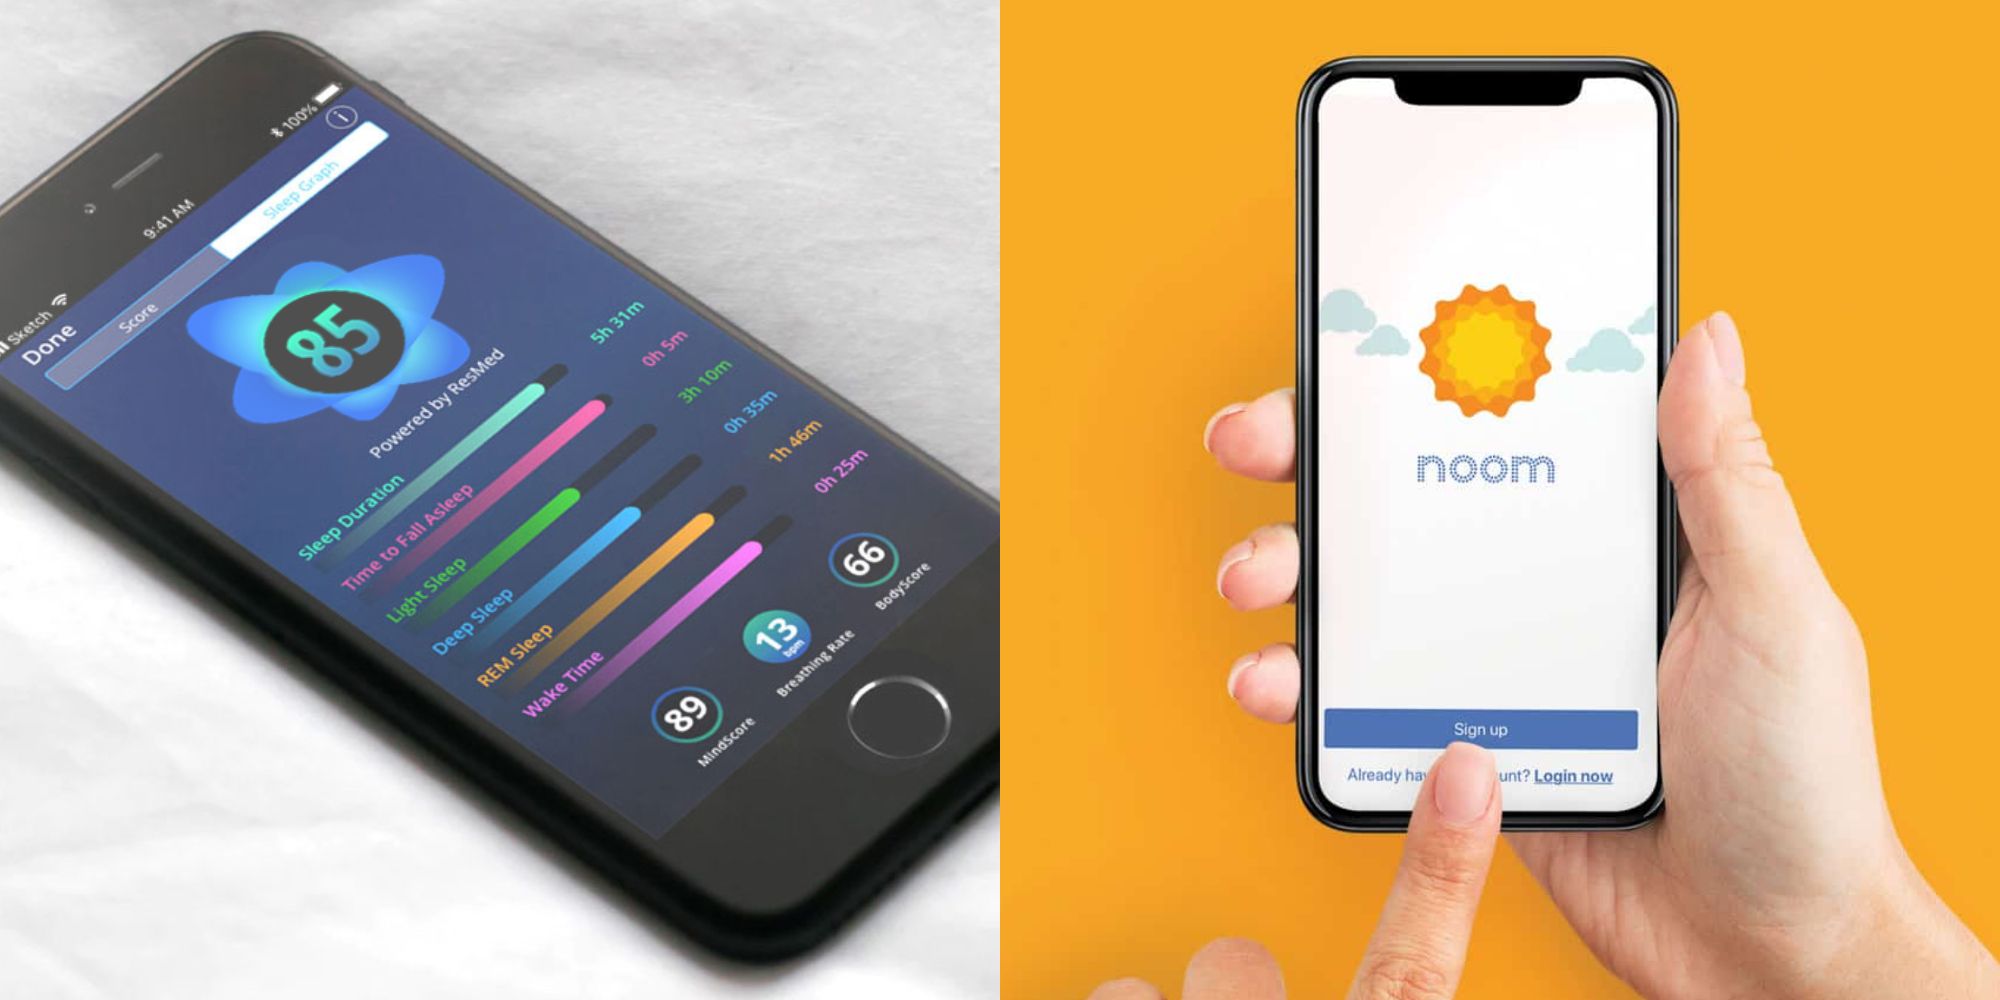 Split image of the SleepScore app and the Noom app.